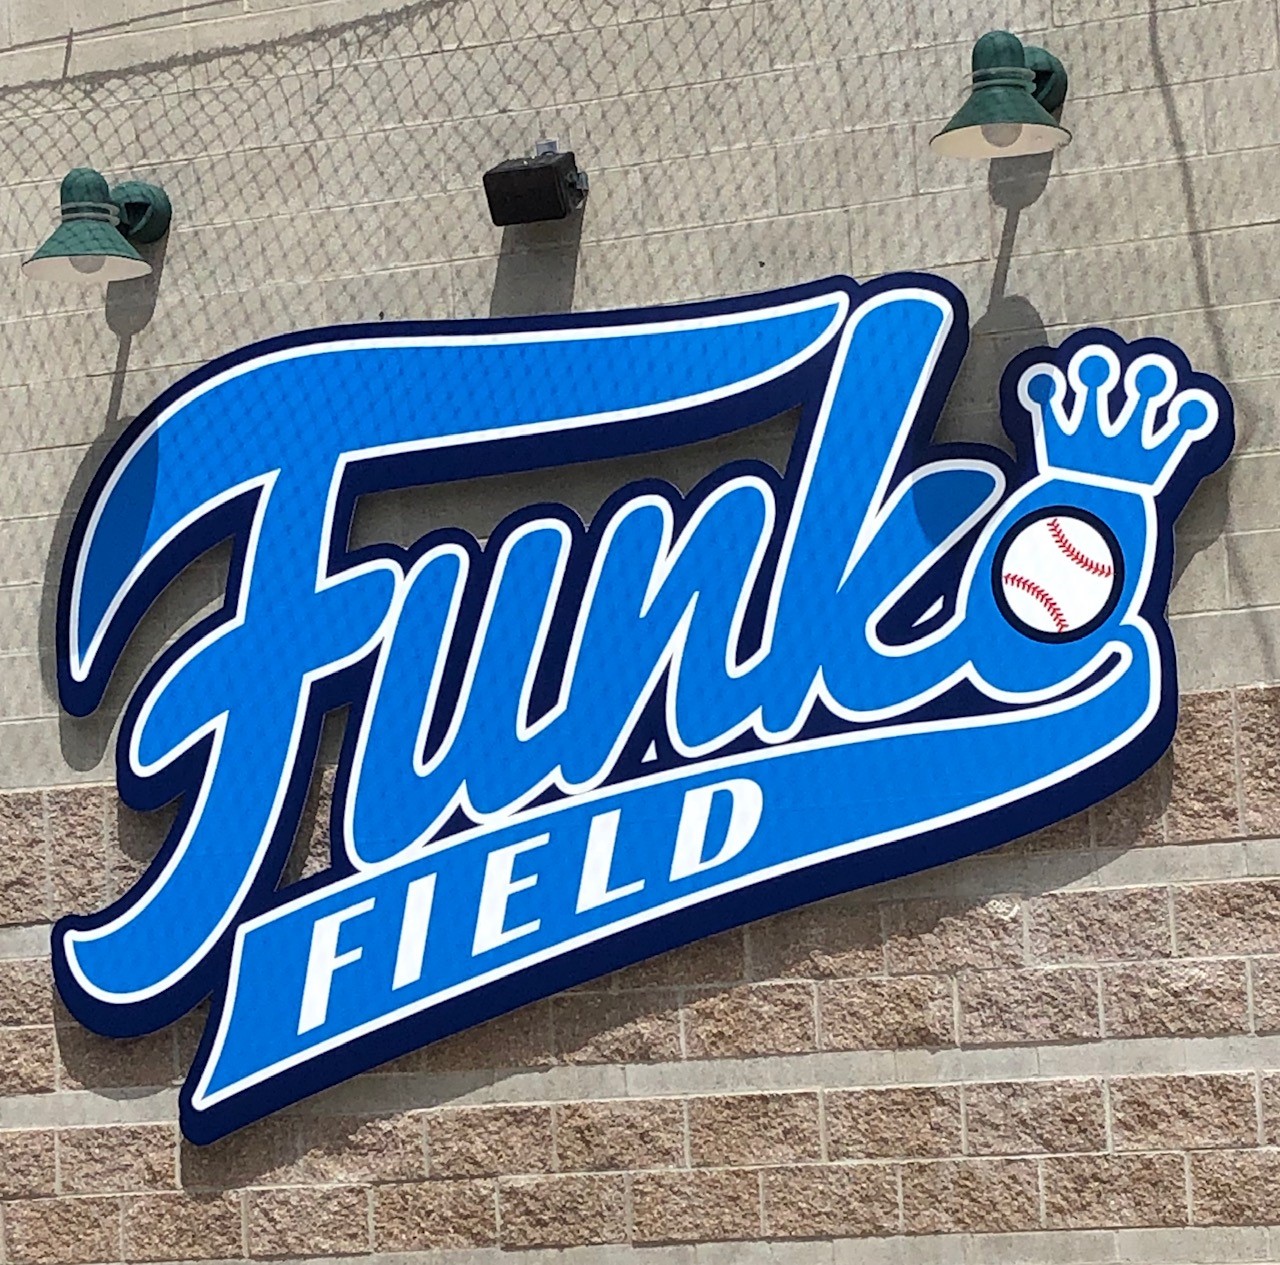 Funko Field